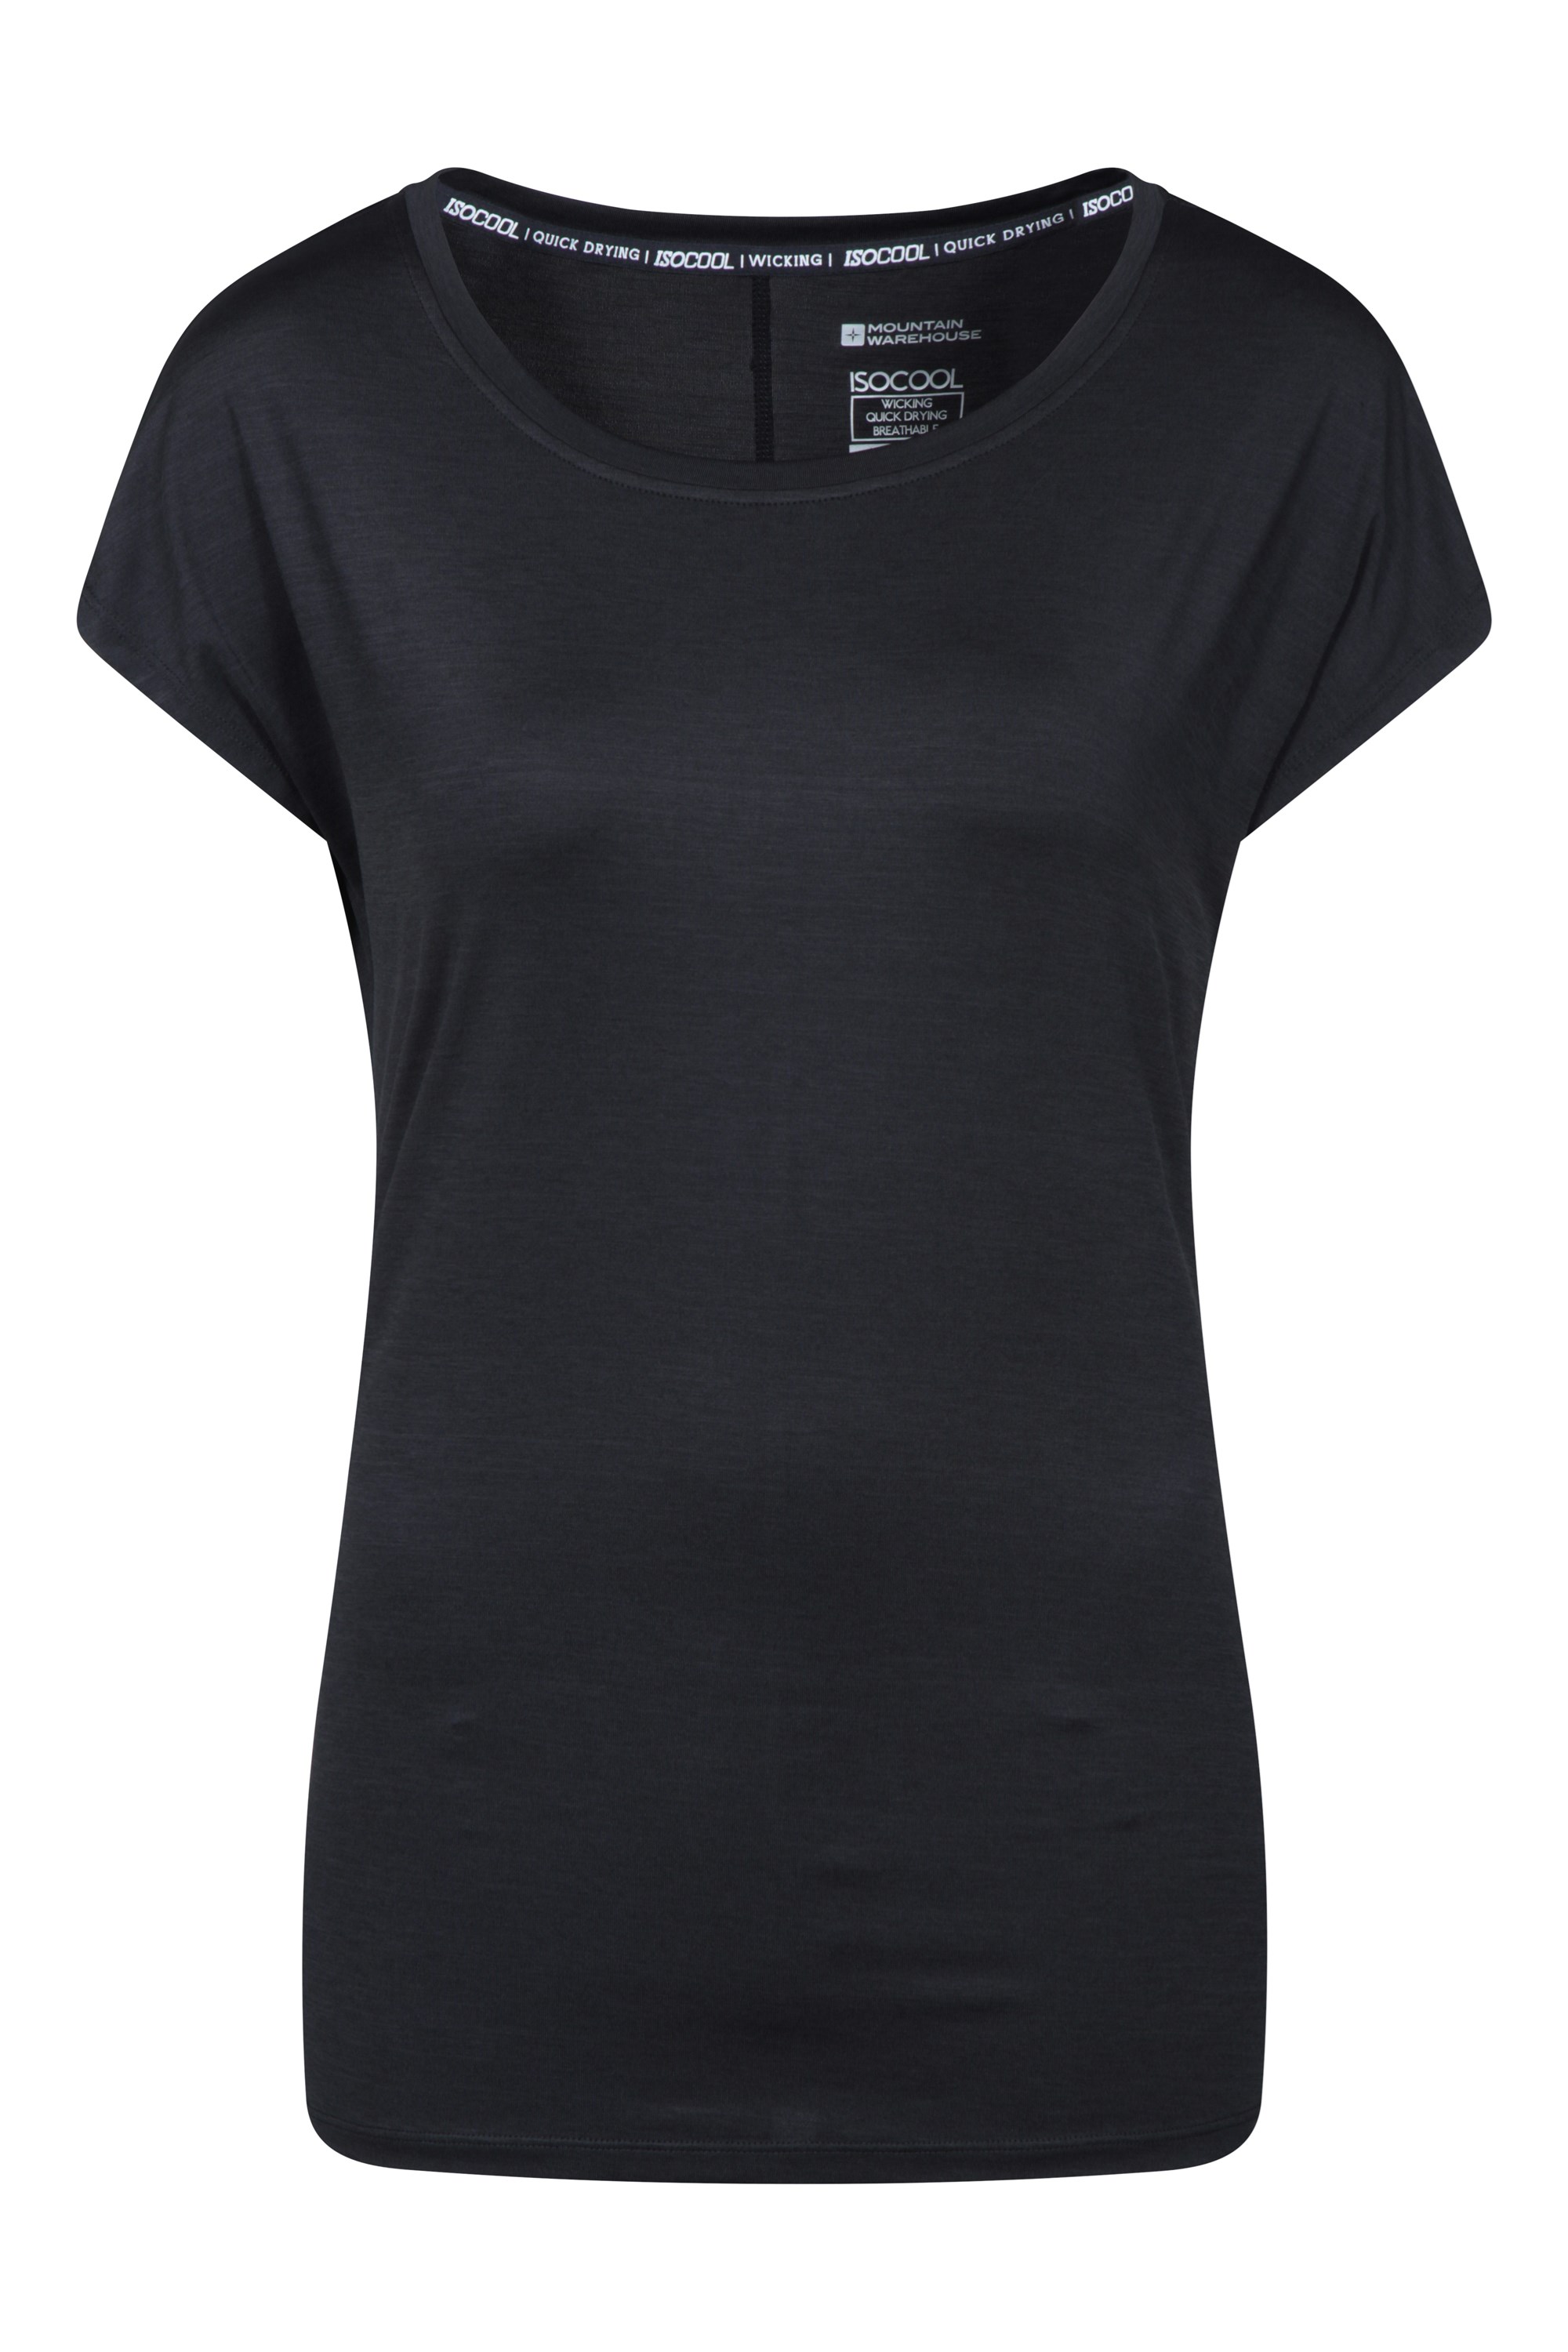 Panna Womens UV T-Shirt 2-Pack - Black